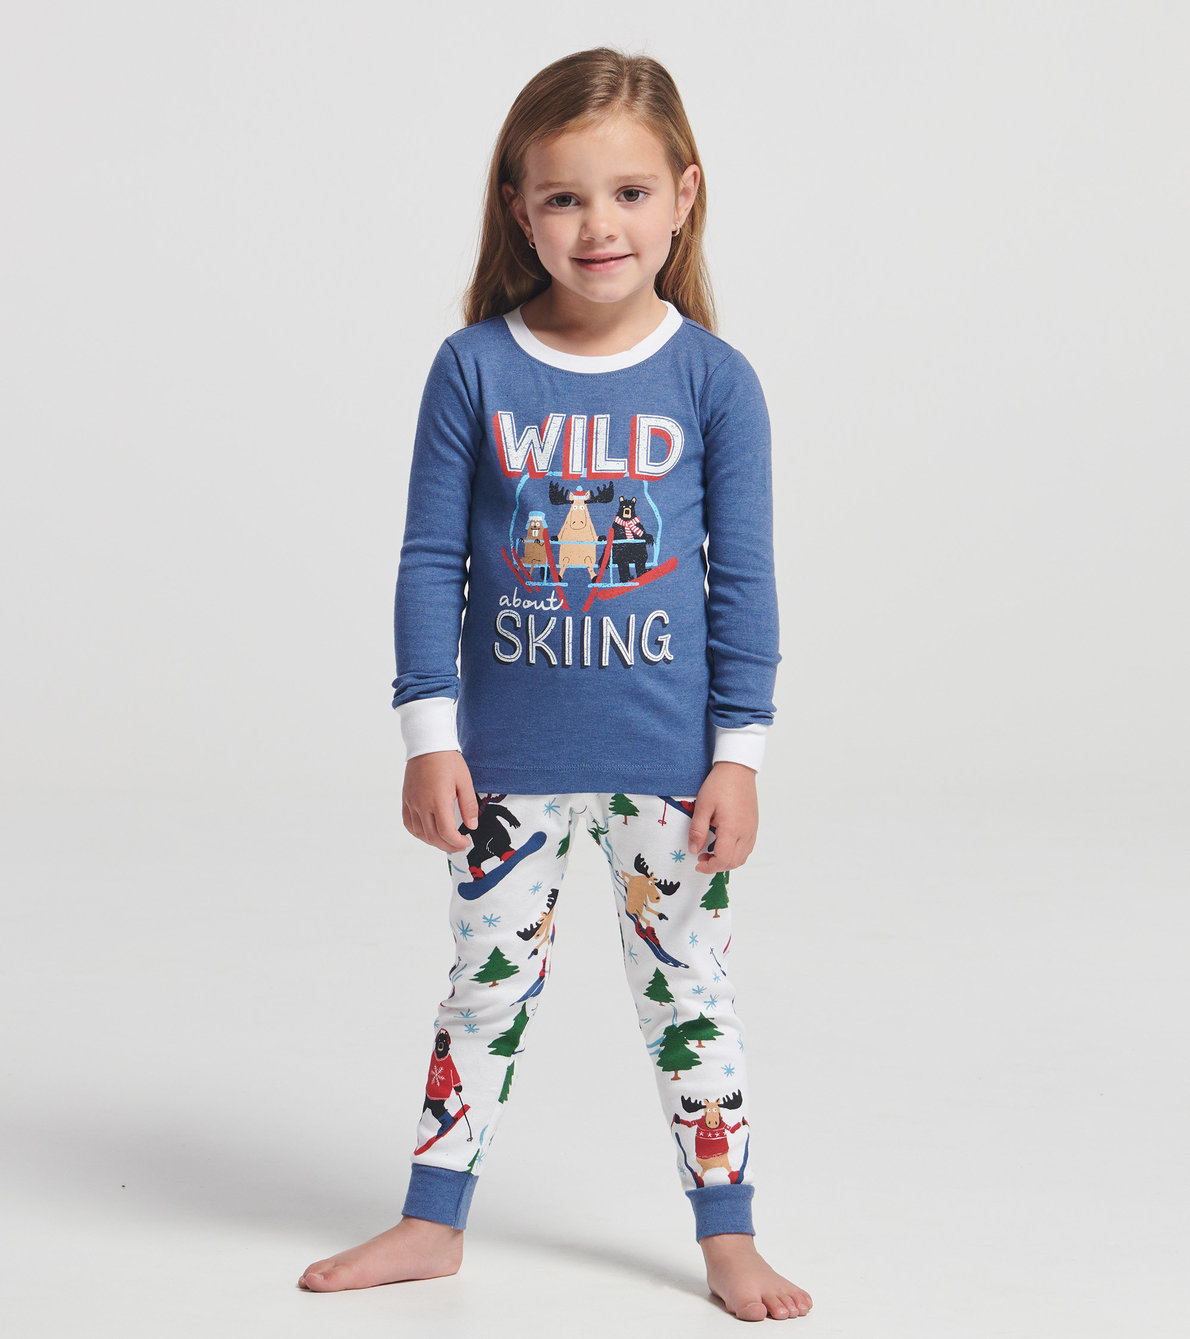 View larger image of Kids Wild About Skiing Appliqué Pajama Set